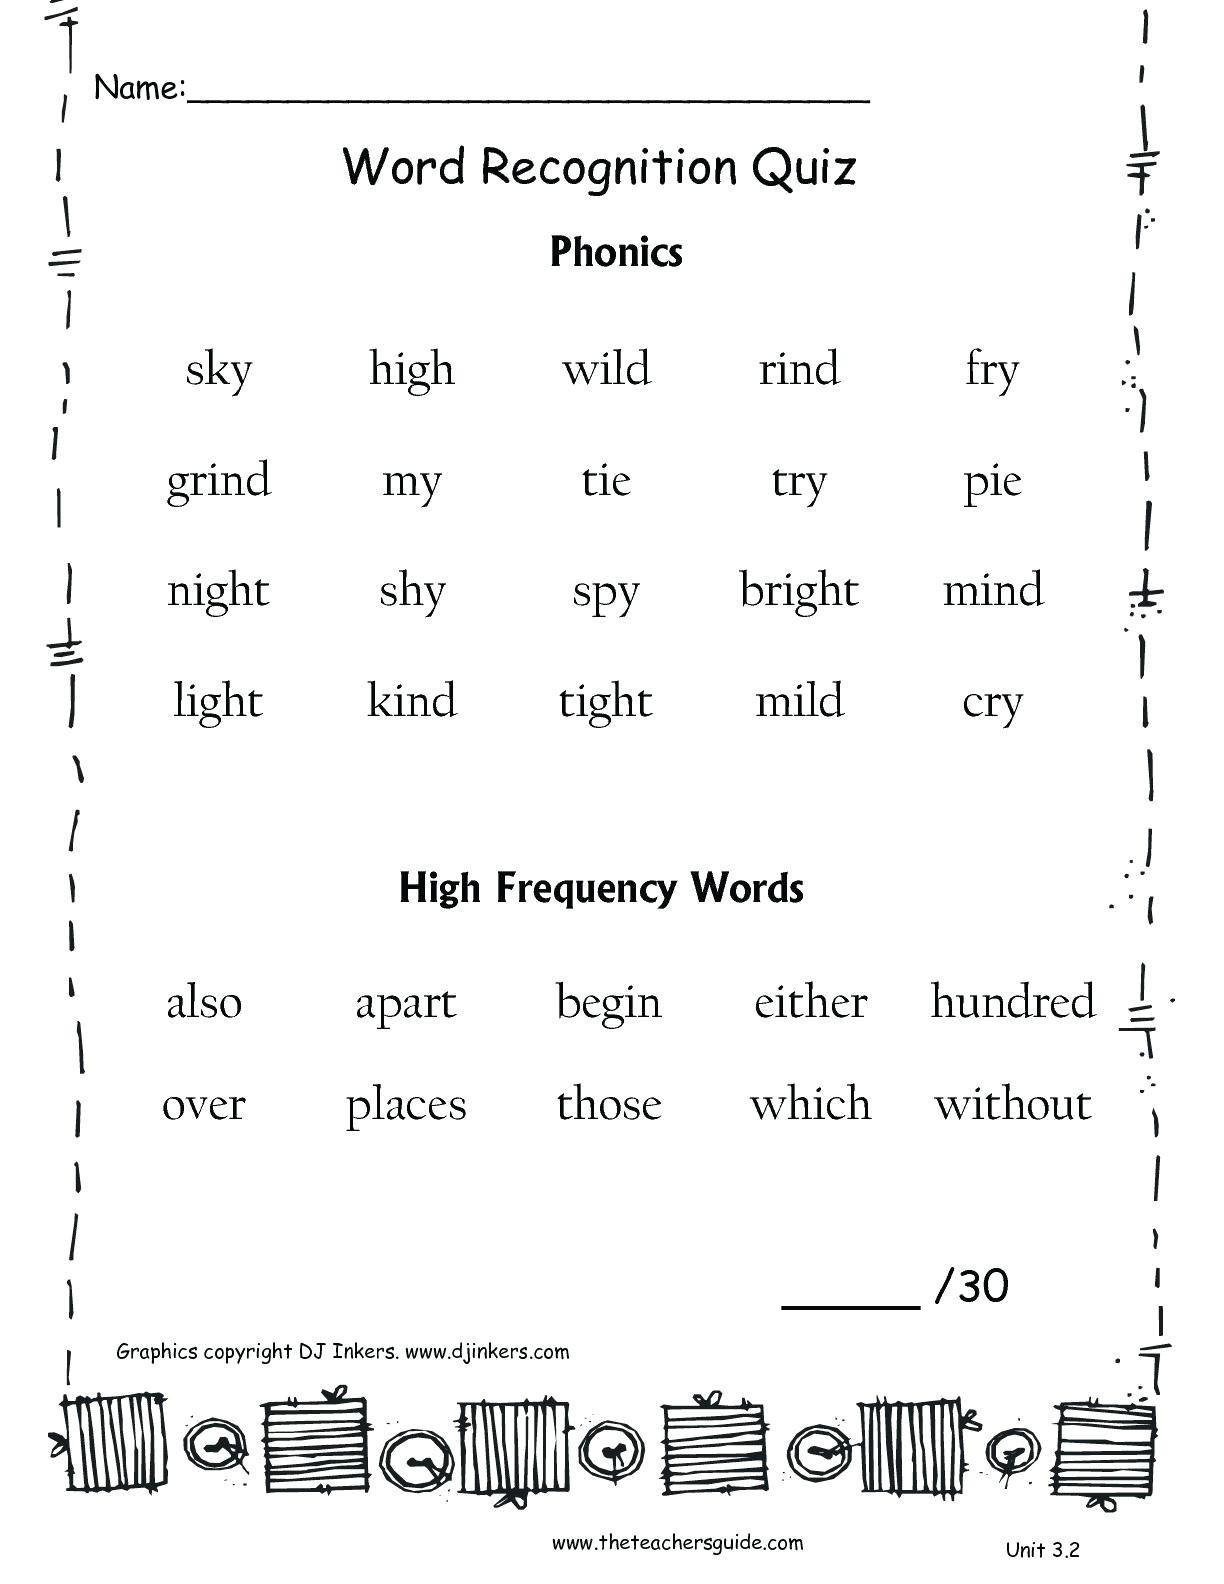 full phonic worksheets for 2nd grade grade phonics worksheets phonics